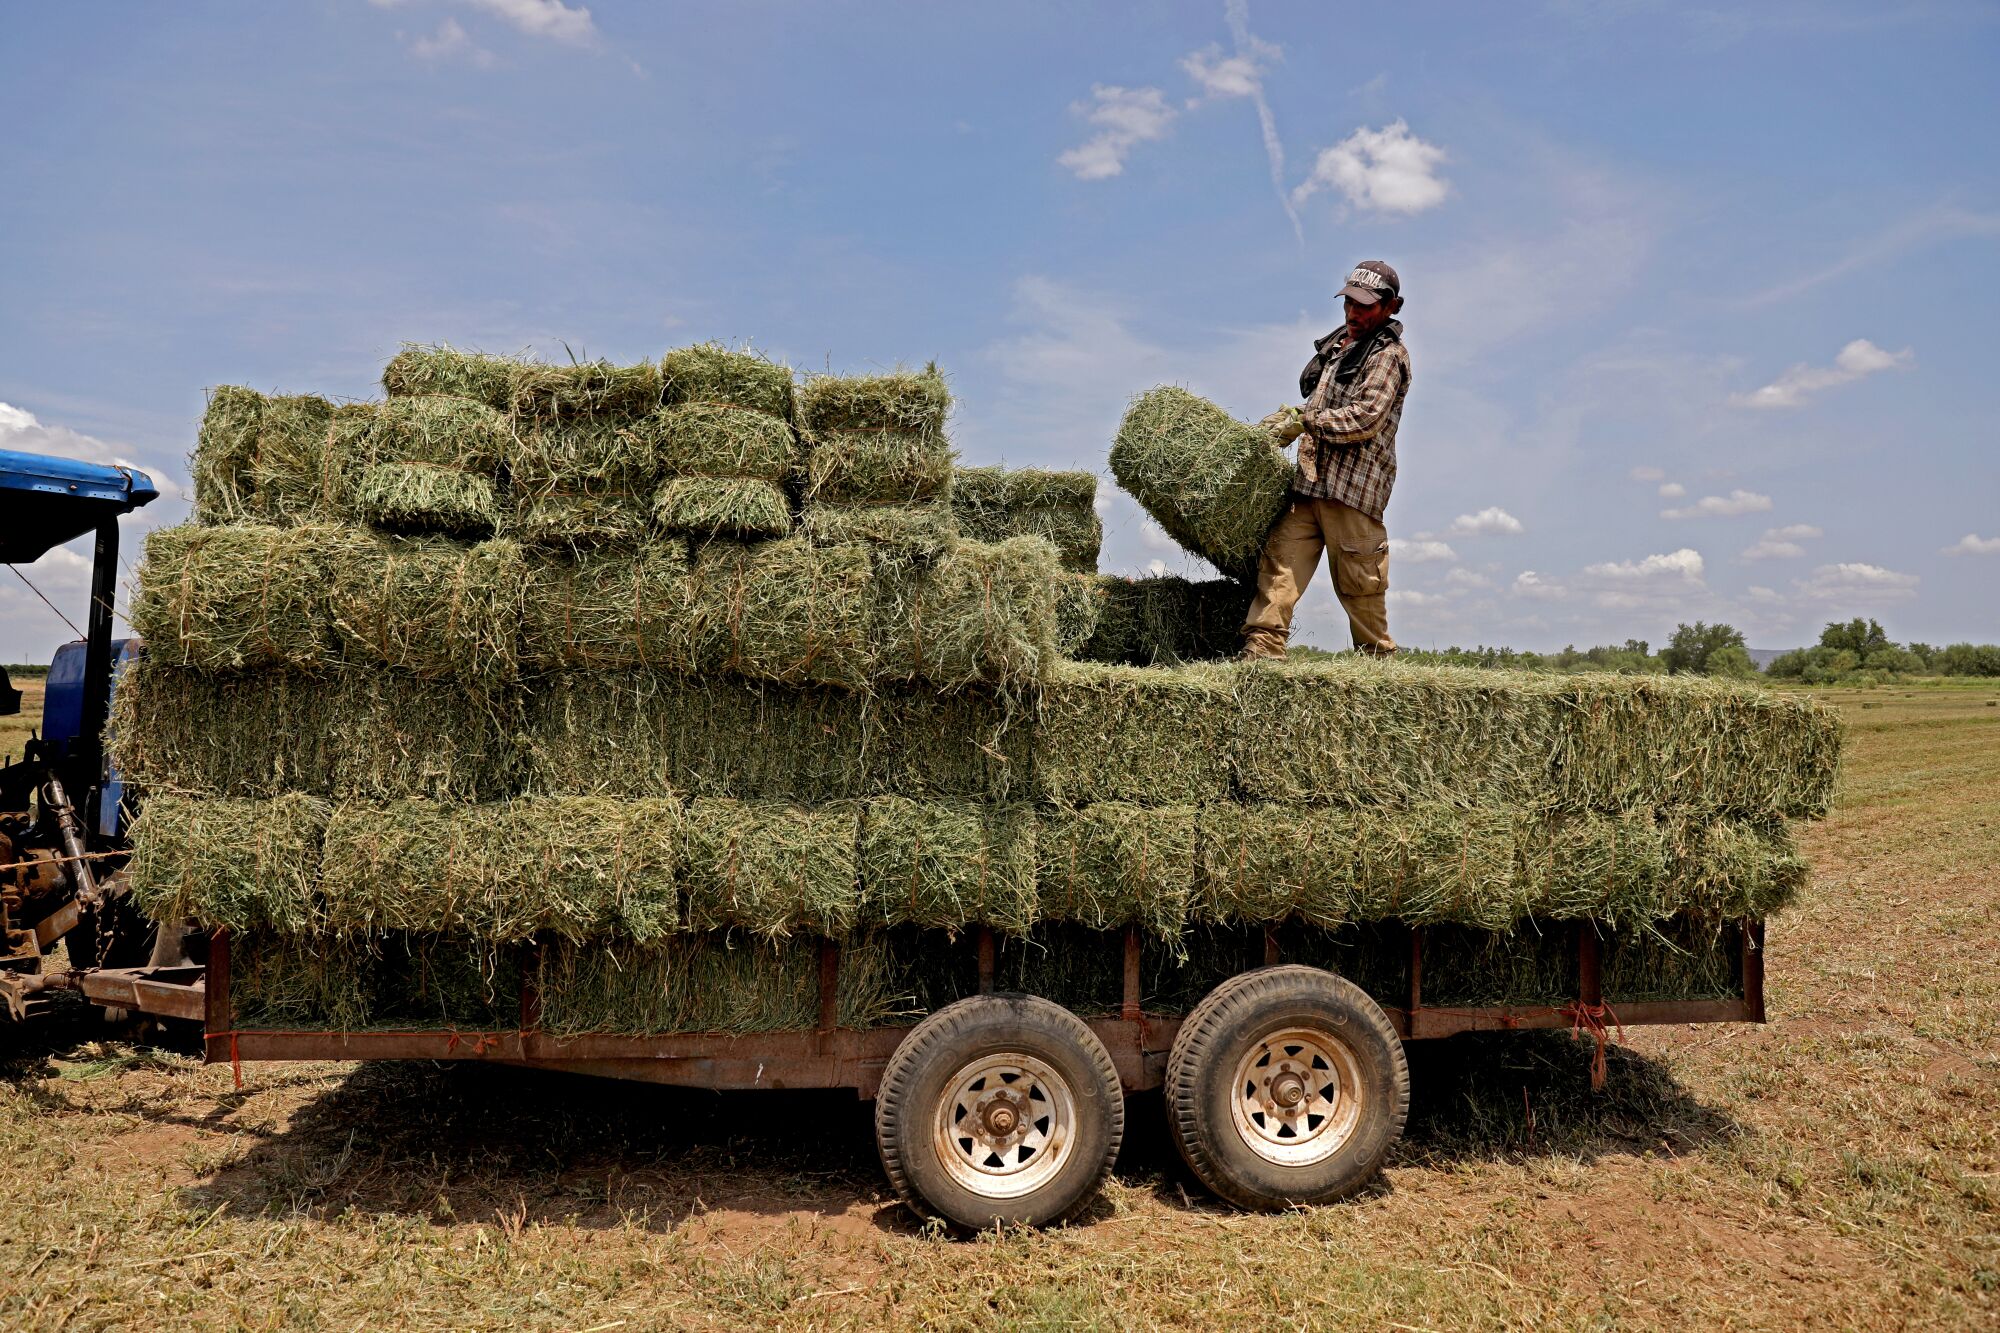 A worker loads bales of alfalfa onto a truck